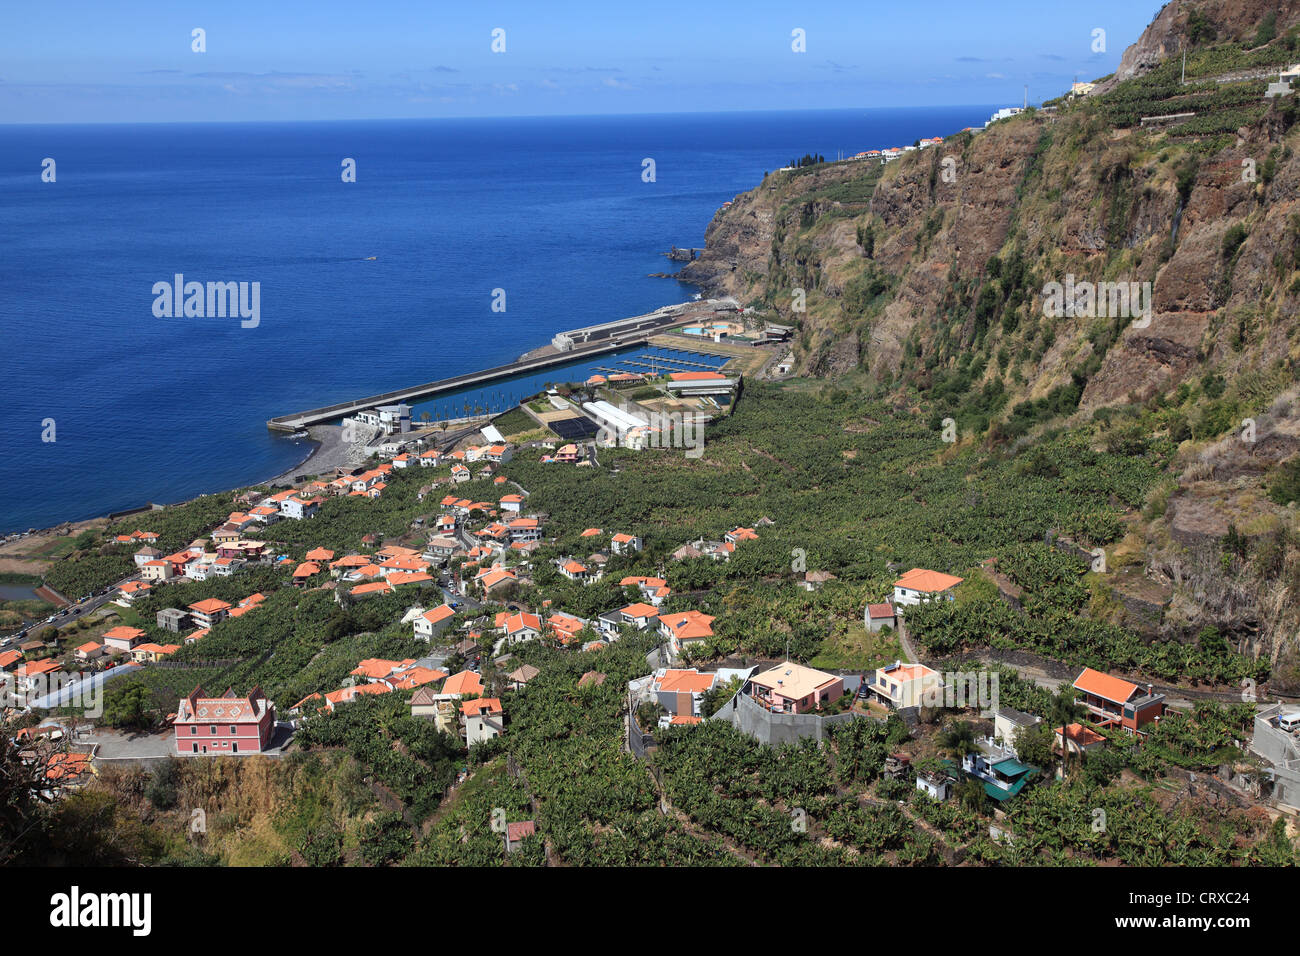 new Marina of Lugar de Baixo, Madeira, Portugal, Europe. Photo by Willy Matheisl Stock Photo